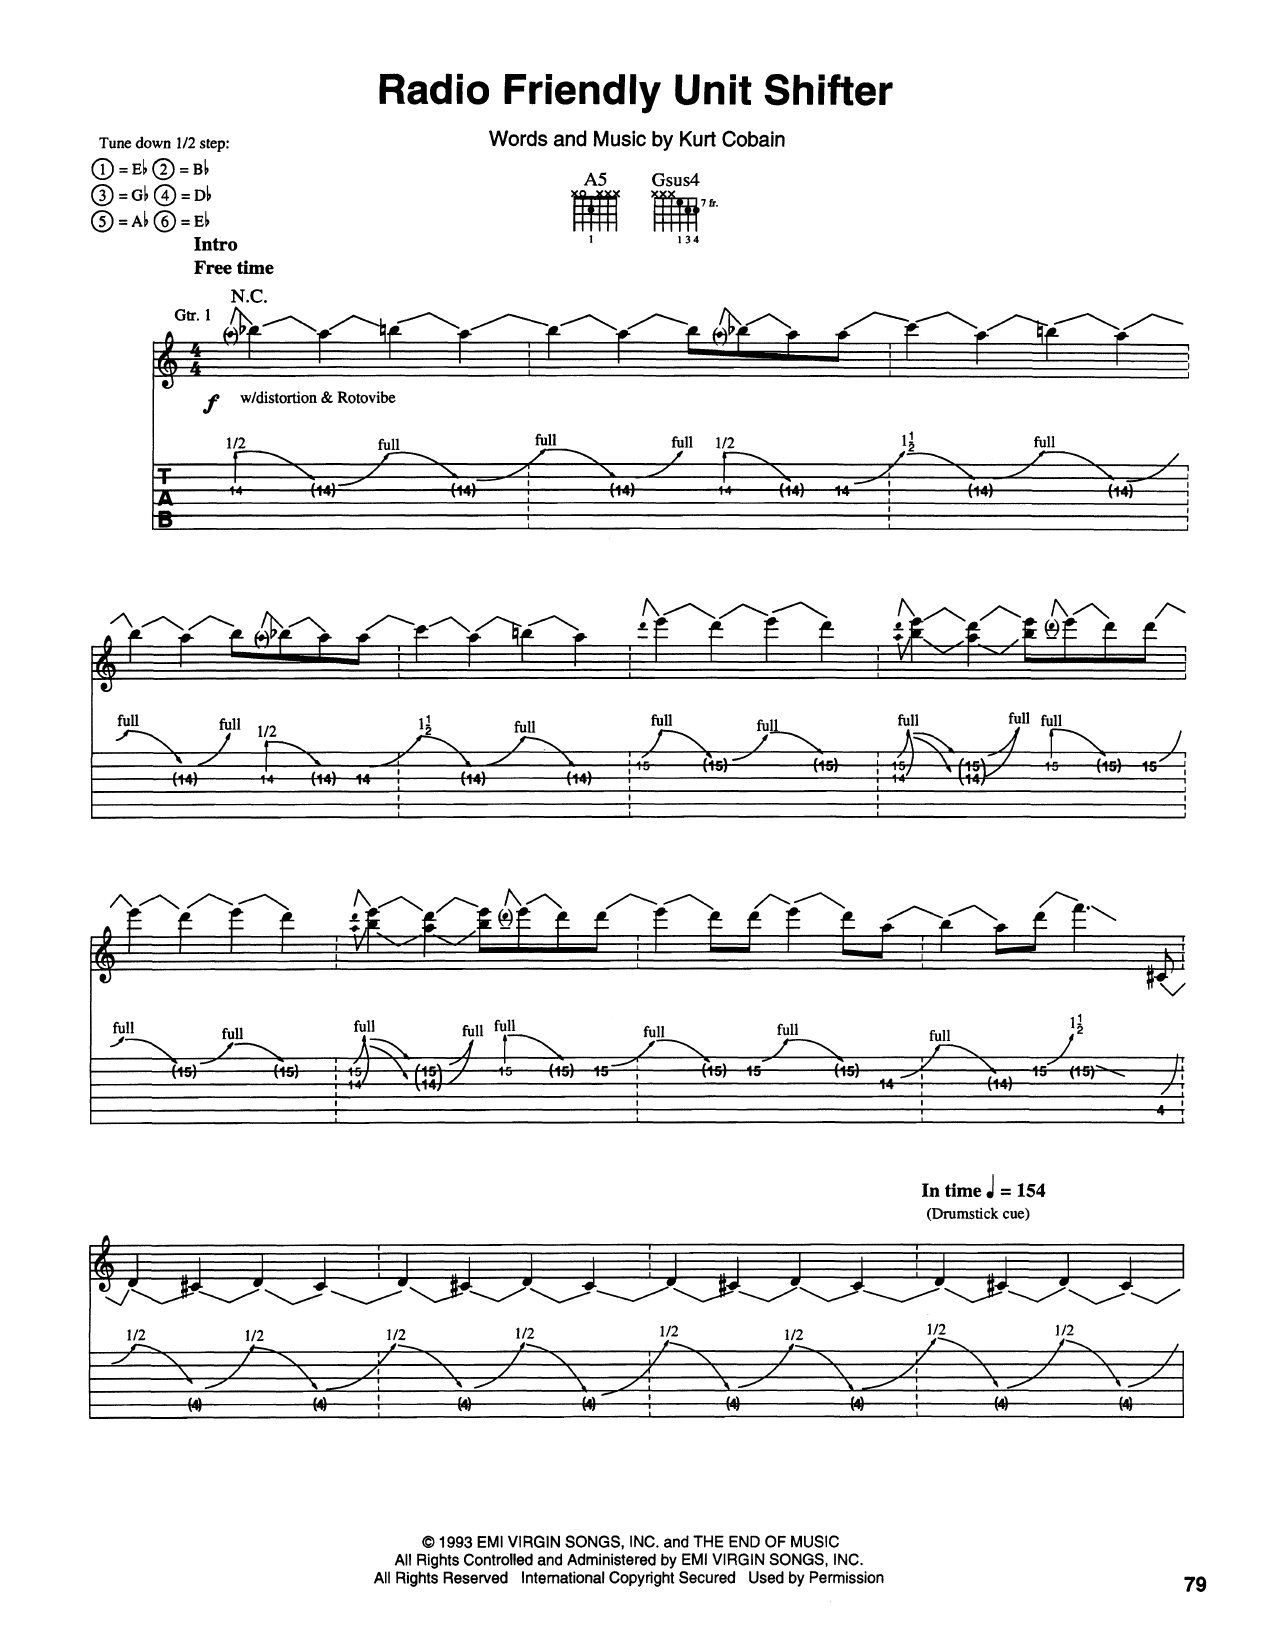 Nirvana Radio Friendly Unit Shifter Sheet Music Notes & Chords for Guitar Tab - Download or Print PDF